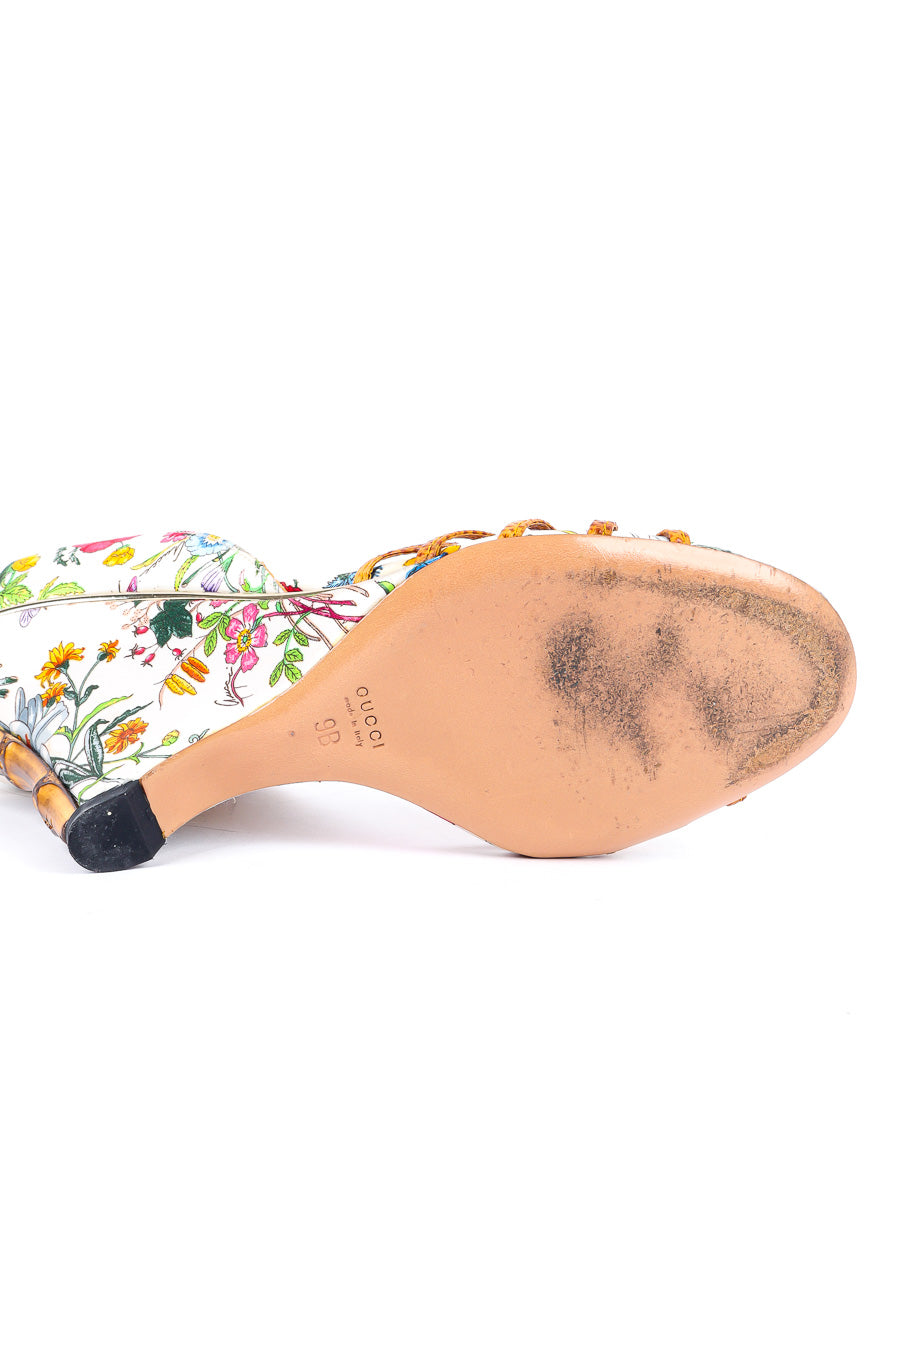 Gucci floral print bamboo wedge sandal sole scuffs @recessla